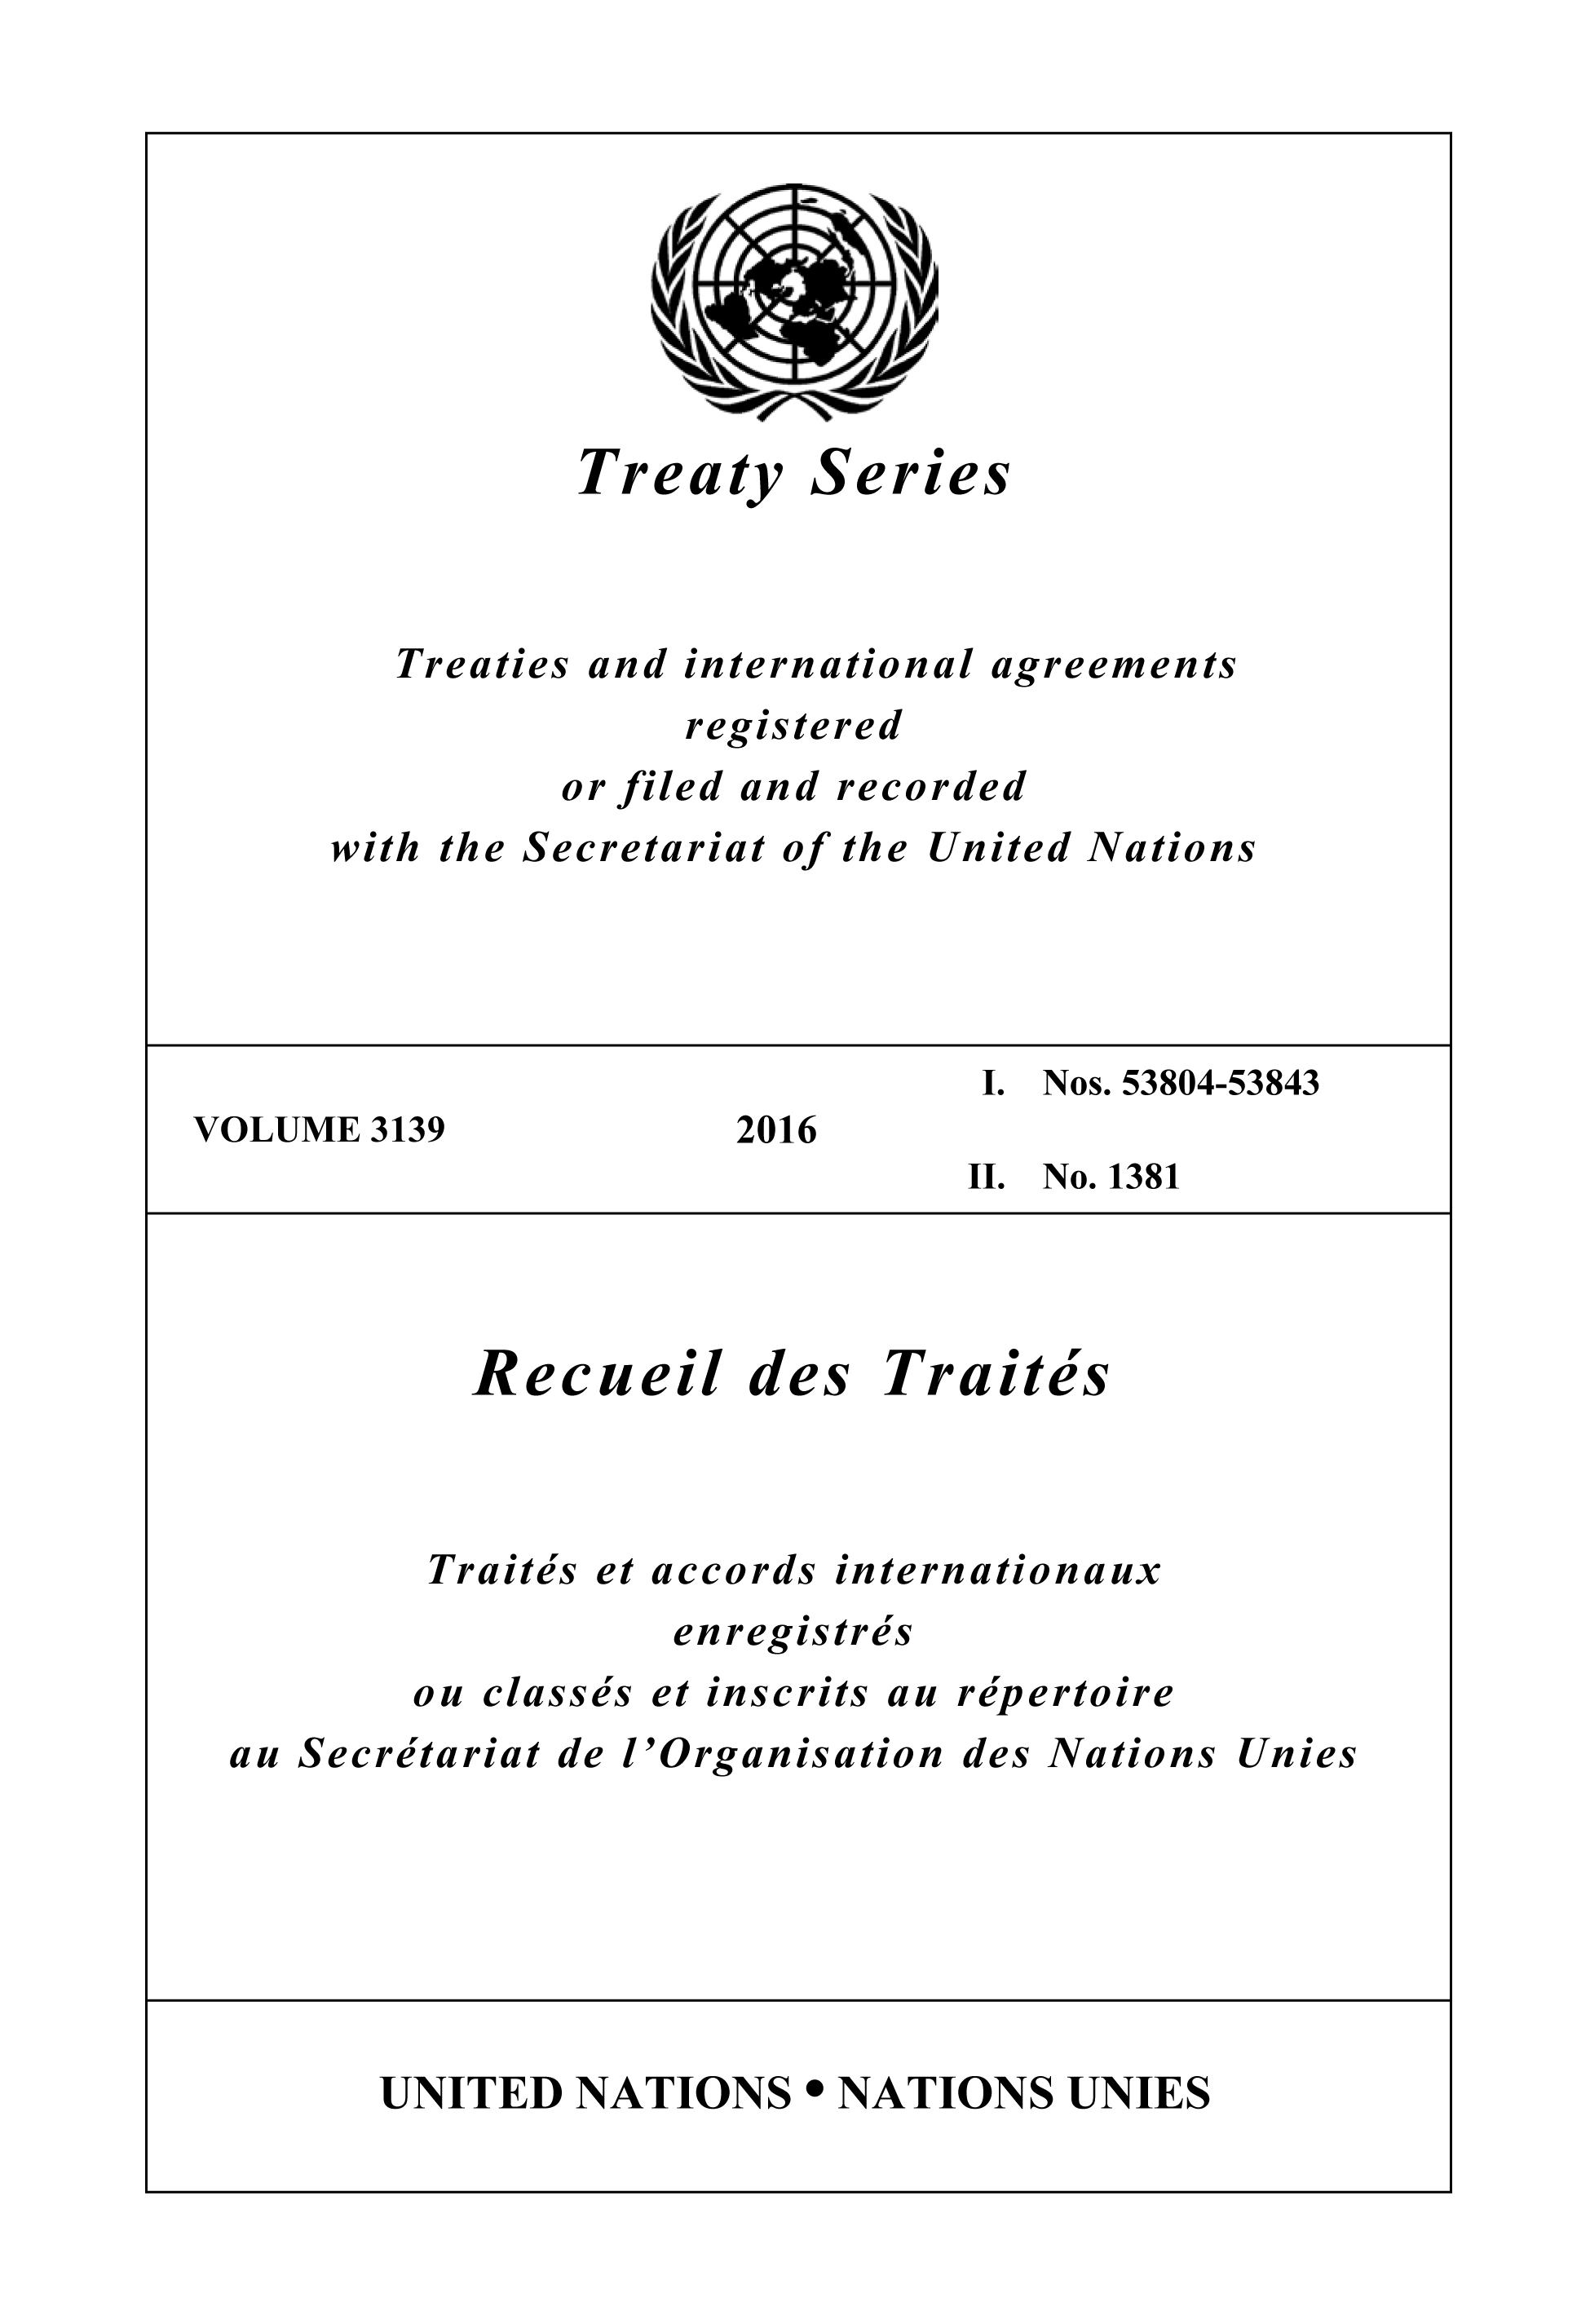 image of Treaty Series 3139